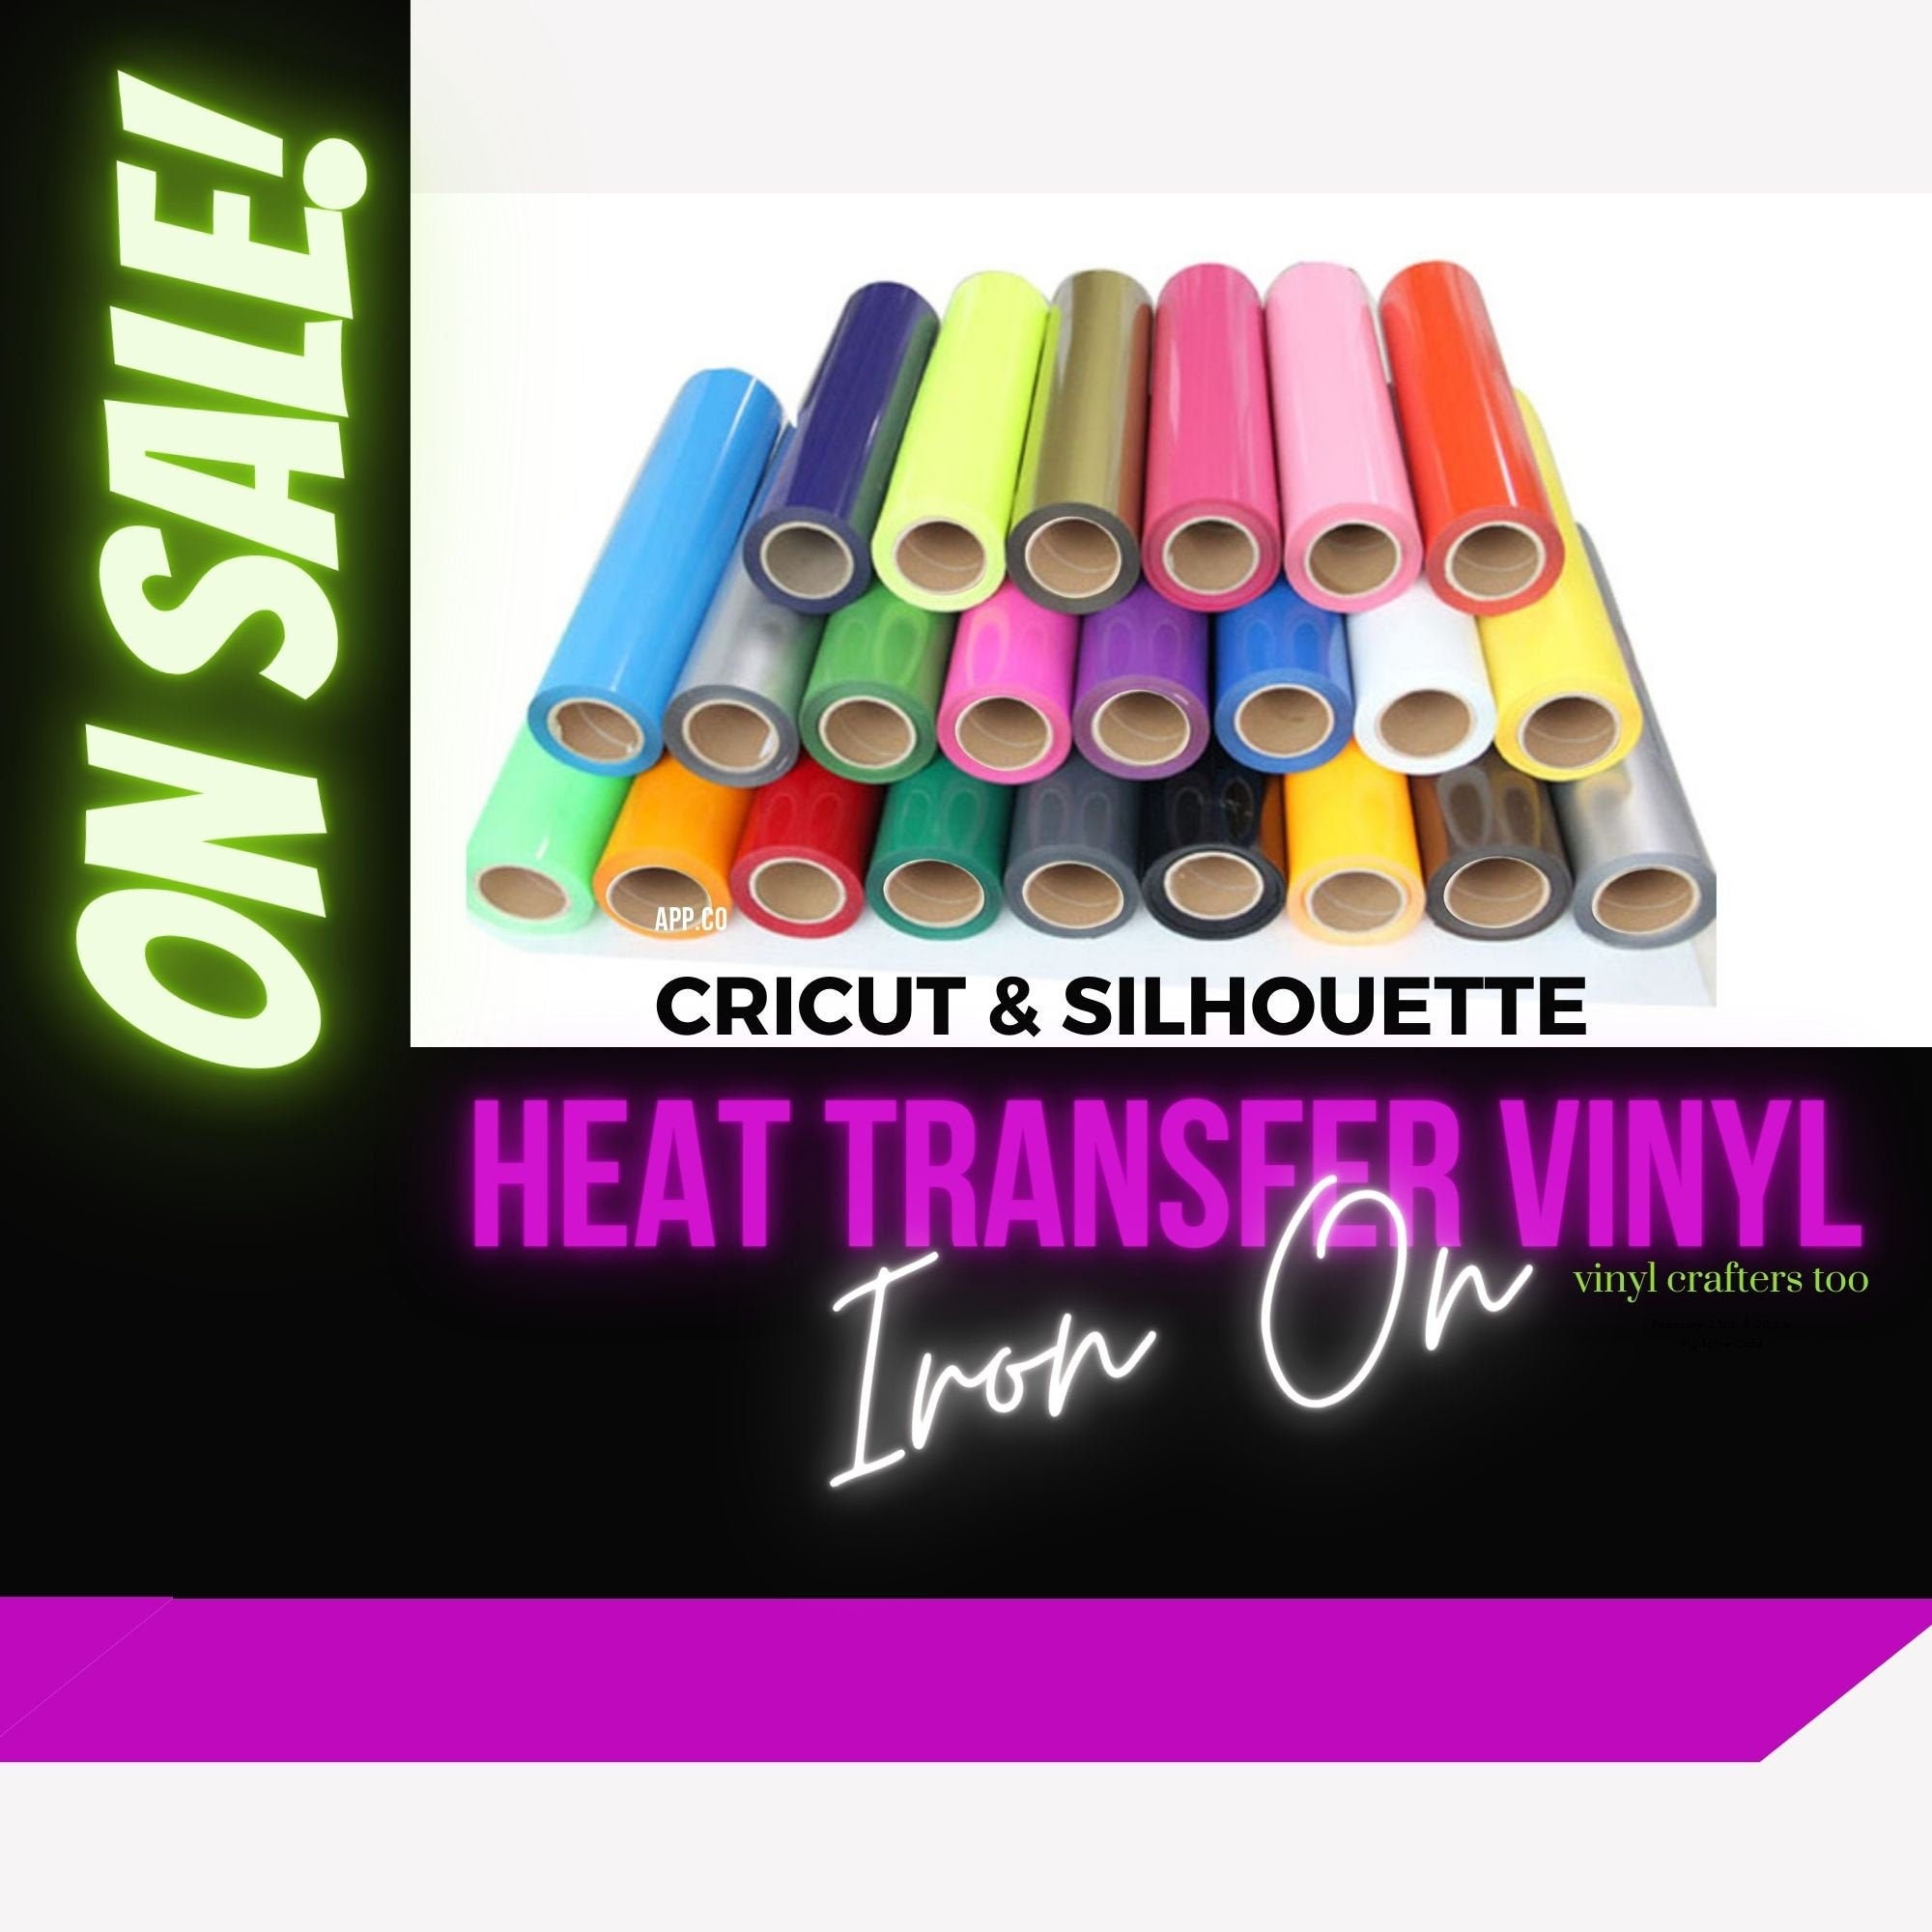 Glitter Heat Transfer Vinyl Bundle, 30 Pack 12X 10 Glitter Htv Vinyl  Sheets